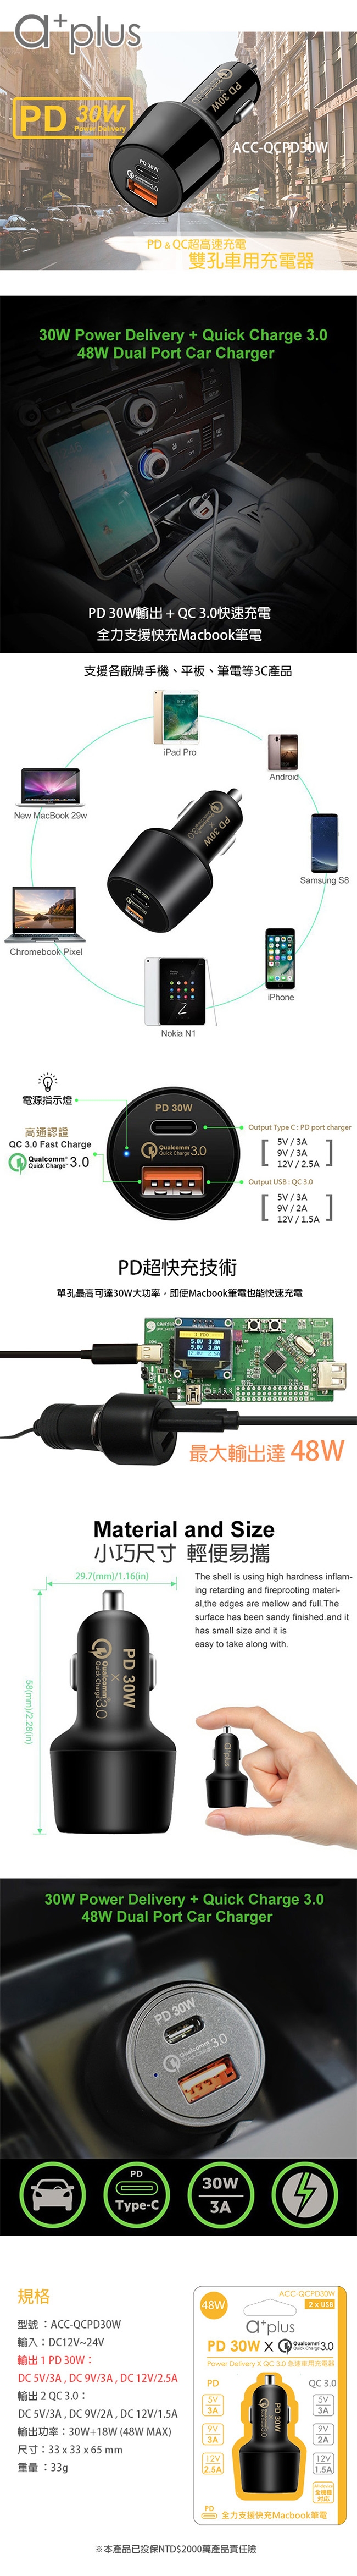 a+plus PD 30W+高通認證QC3.0 超極速車用充電器ACC-QCPD30W